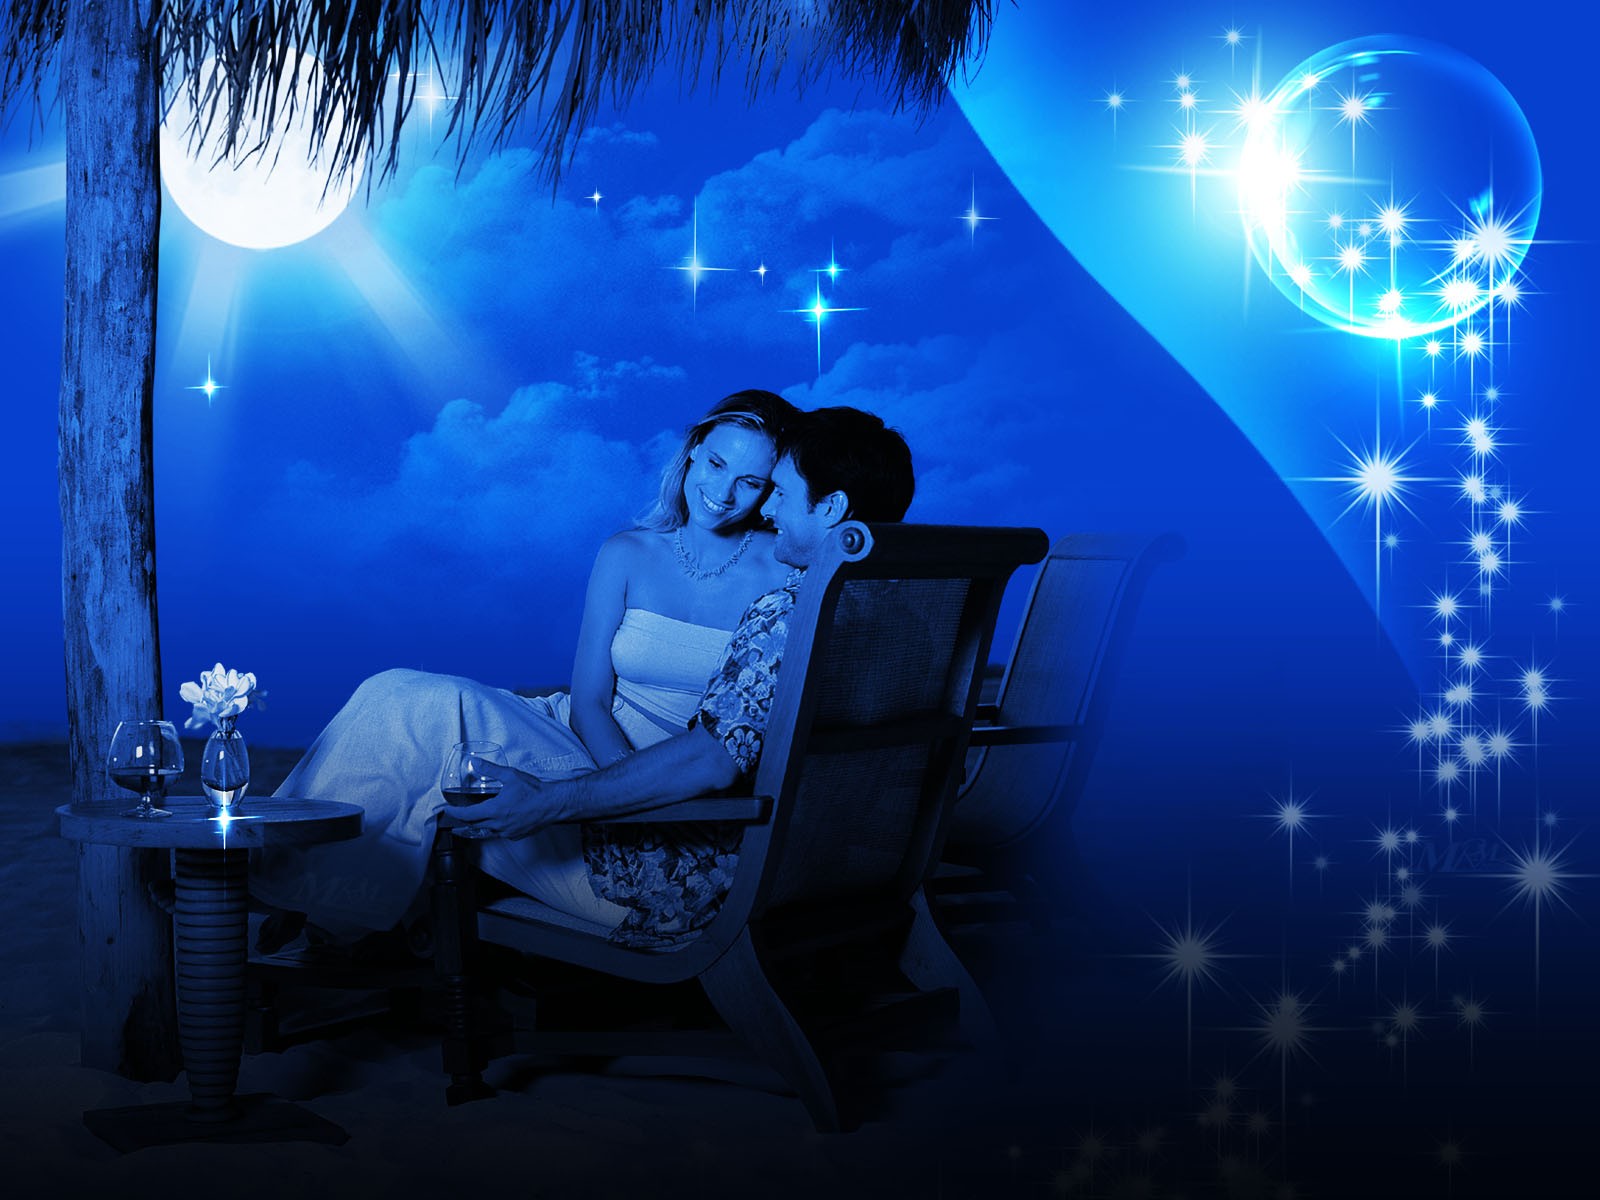 Lovely Couple In Romance Moon Light